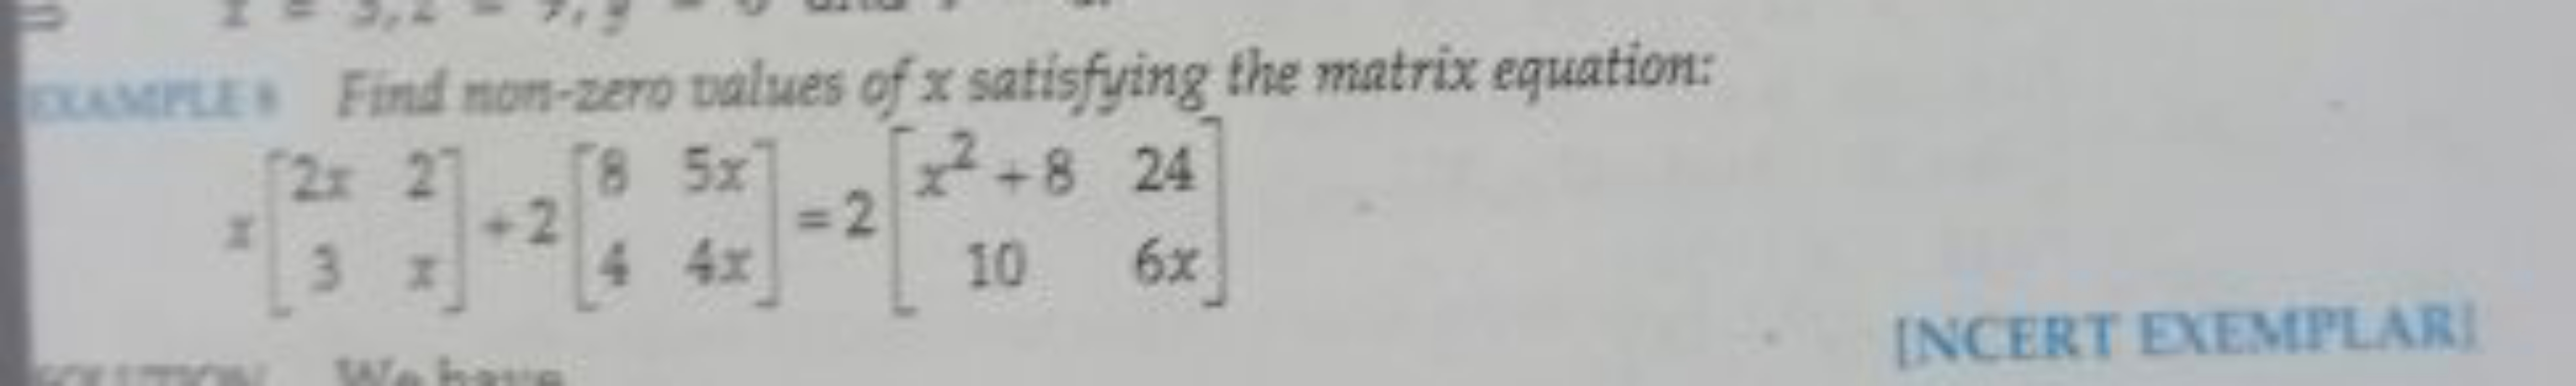 nustrus Find non-zero values of x satisfying the matrix equation:
\[
x